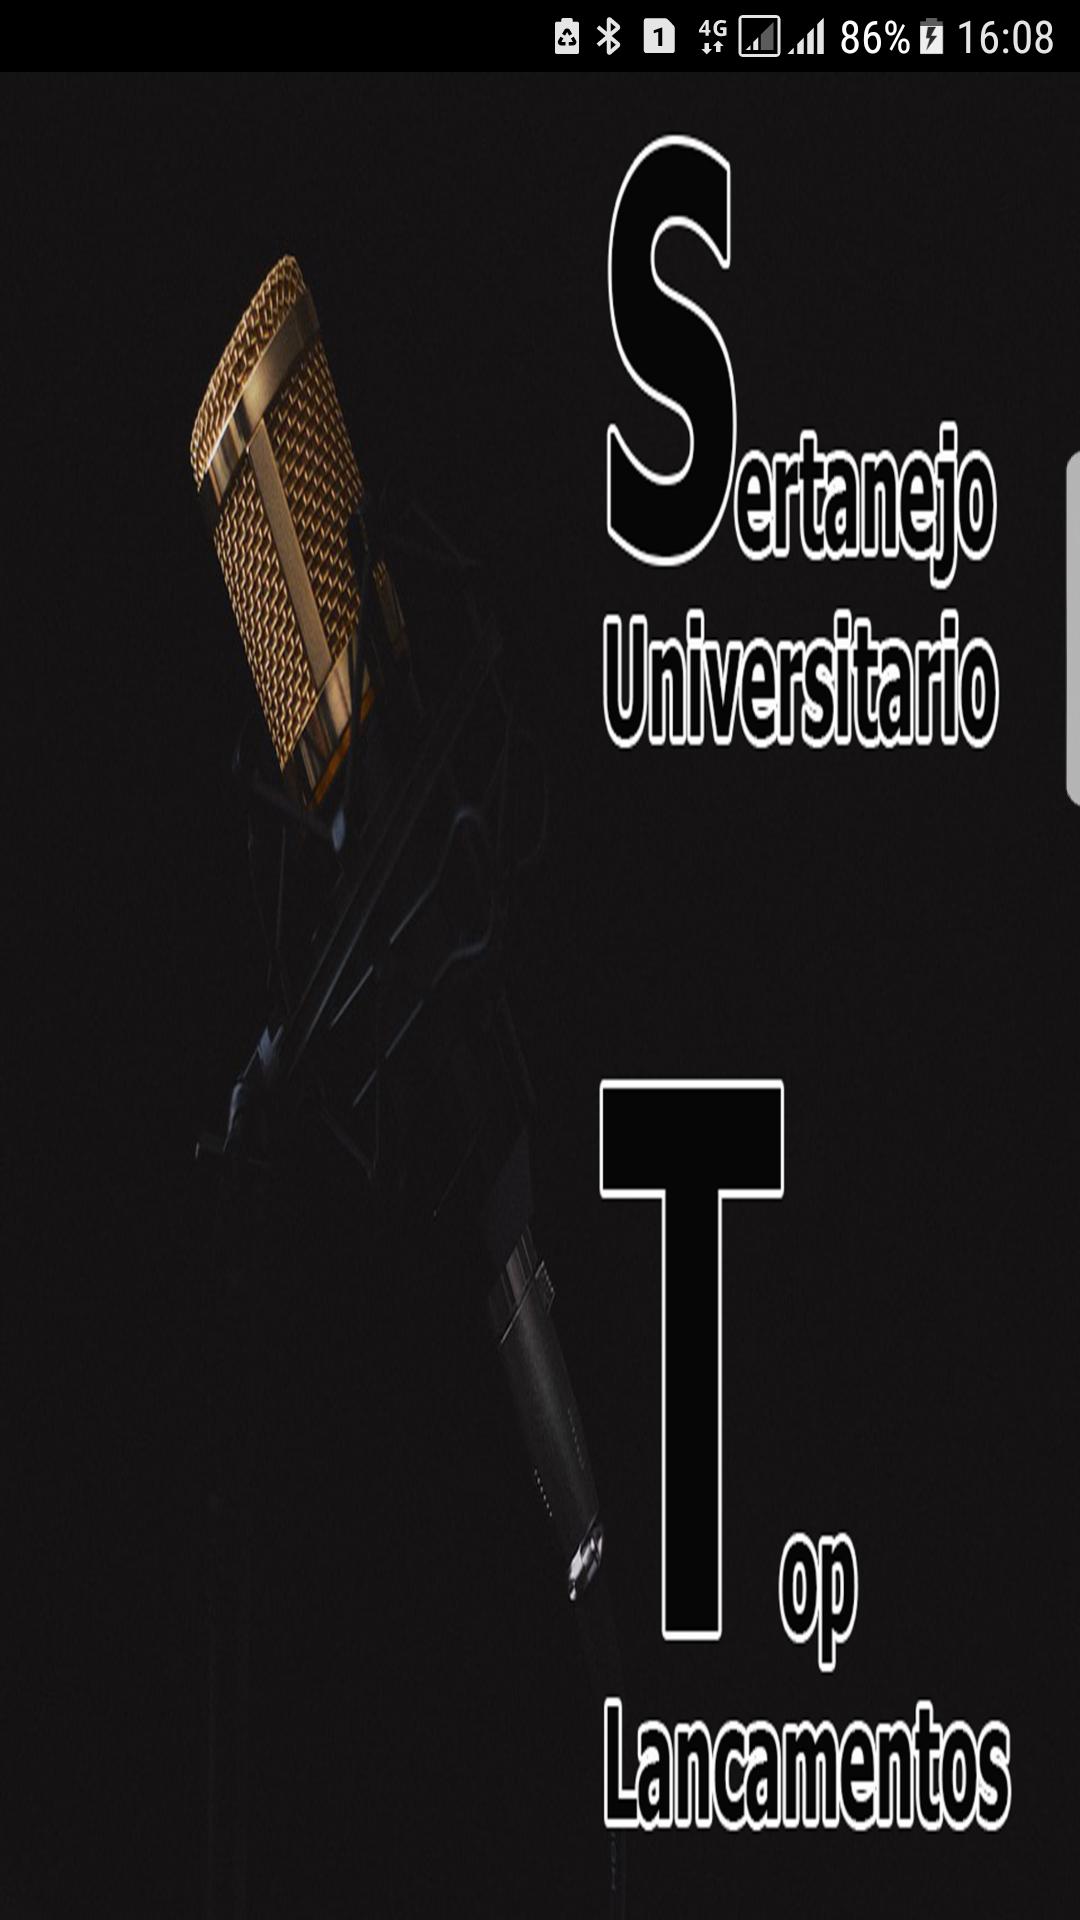 Sertanejo Universitario 2018 Top Lancamentos for Android - APK Download